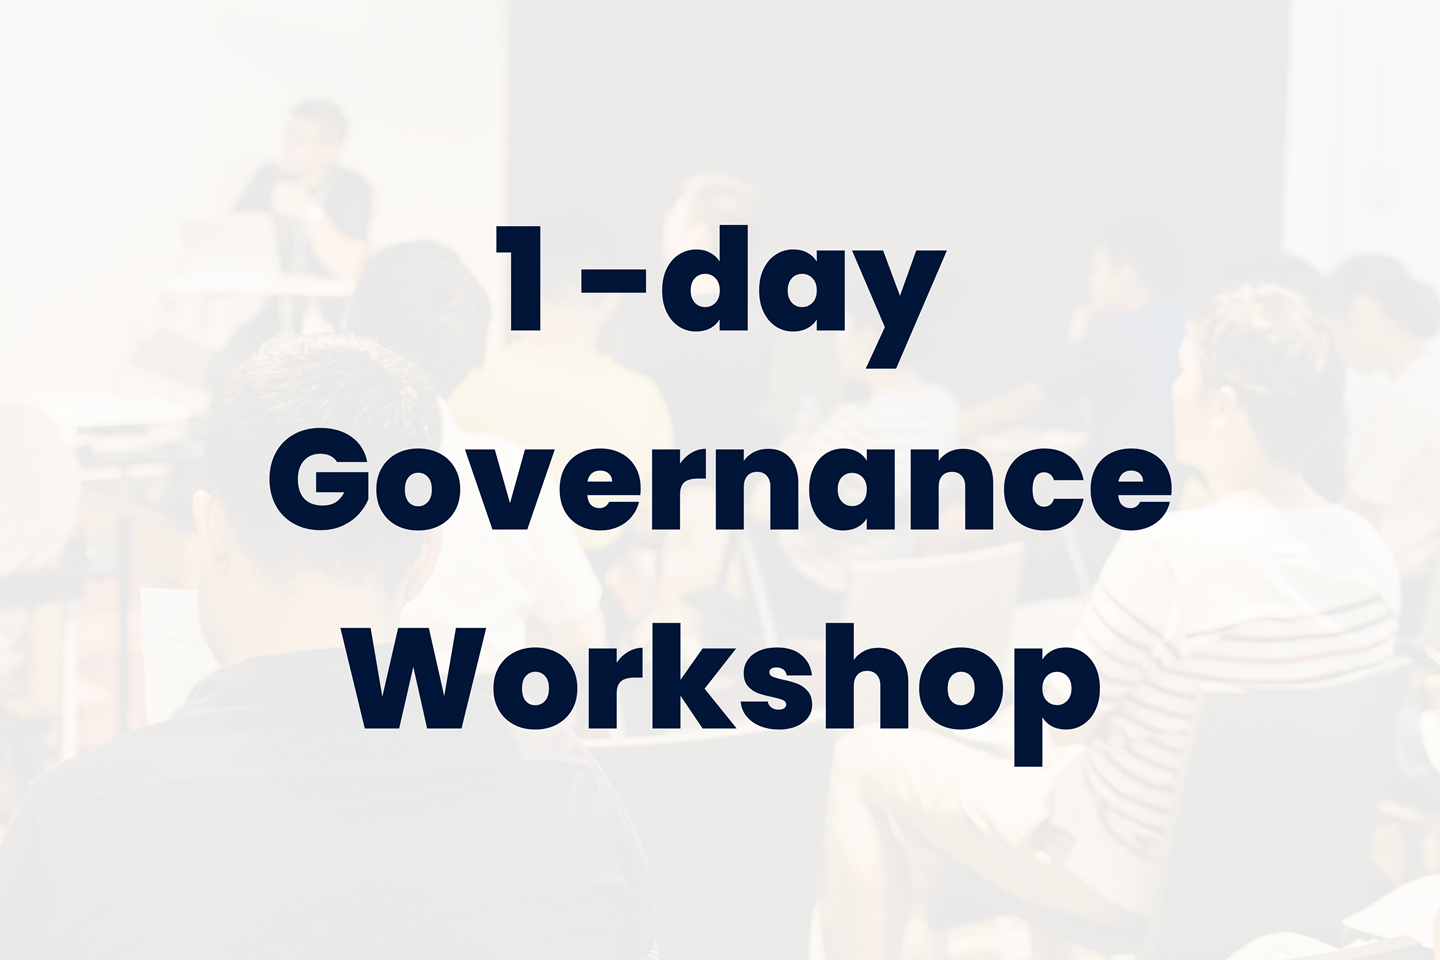  1 day gov workshop text